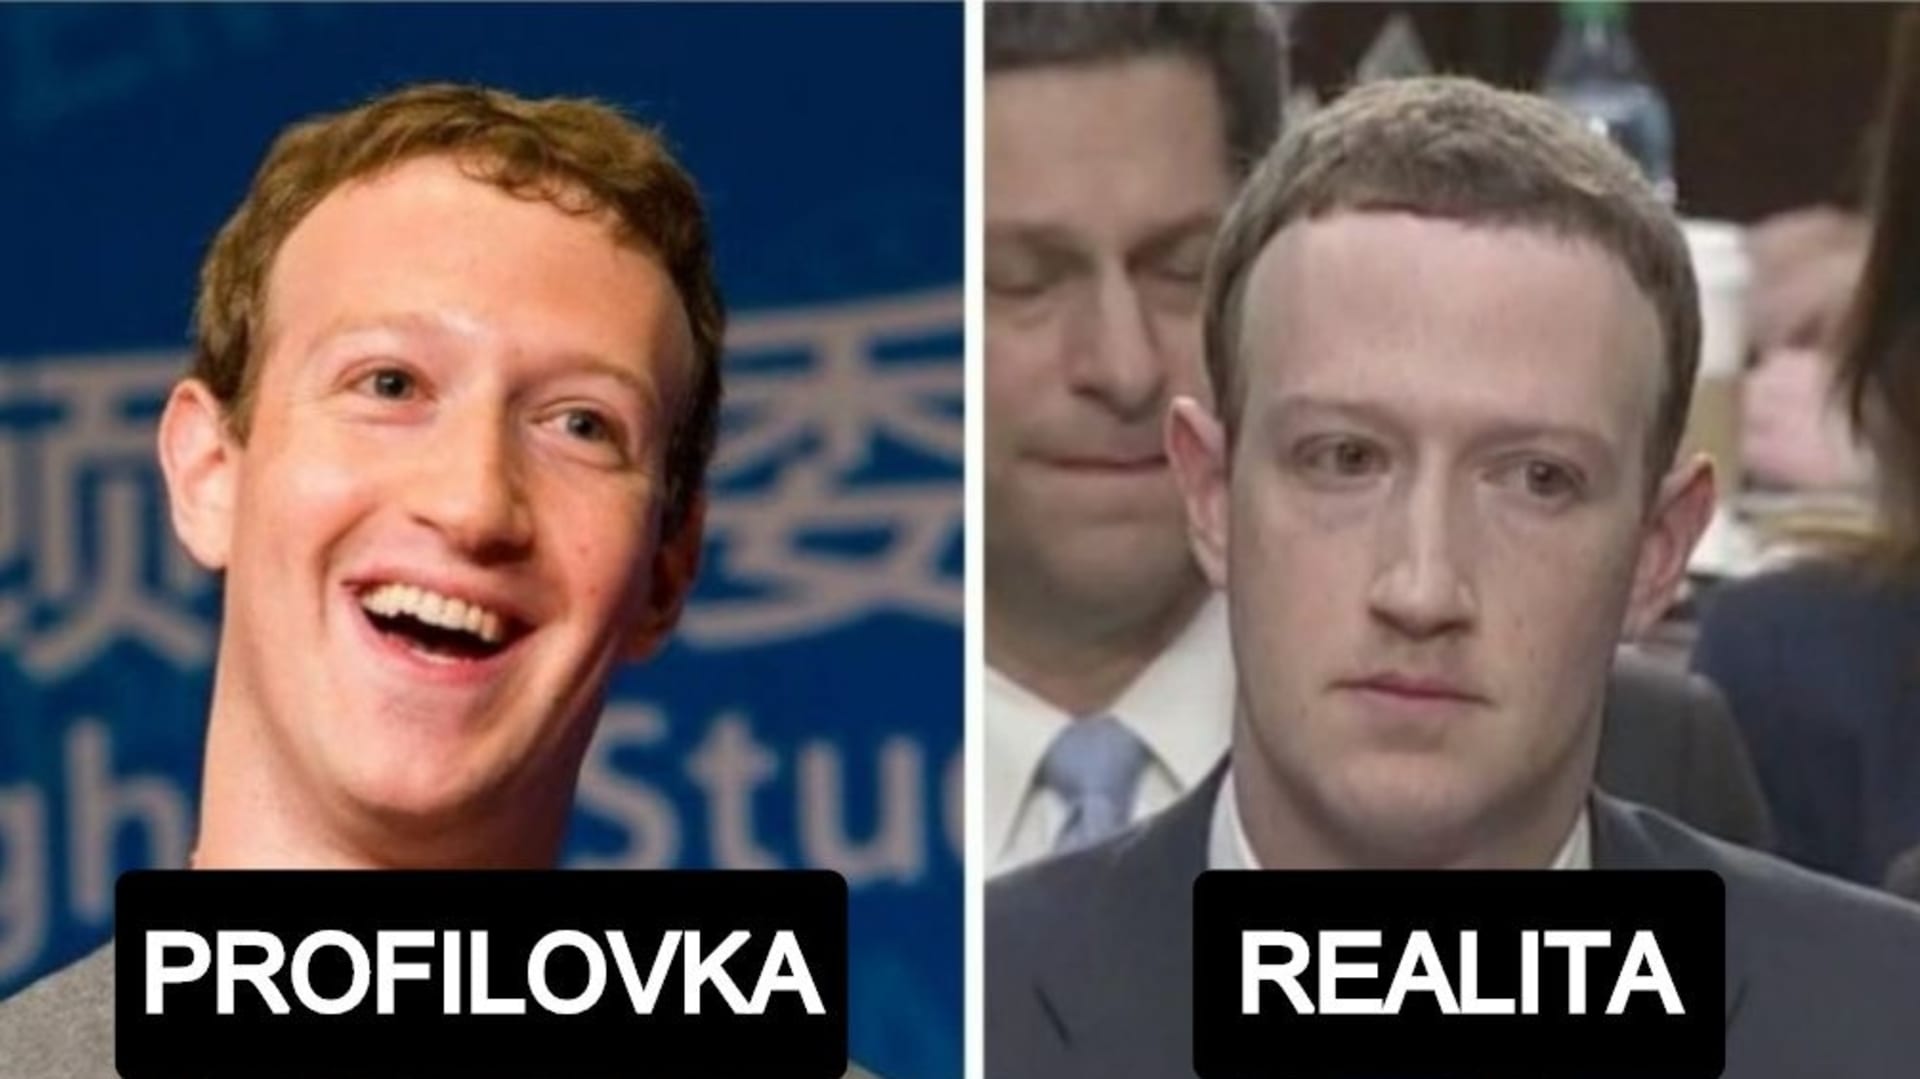 Internetové vtipy na Marka Zuckerberga